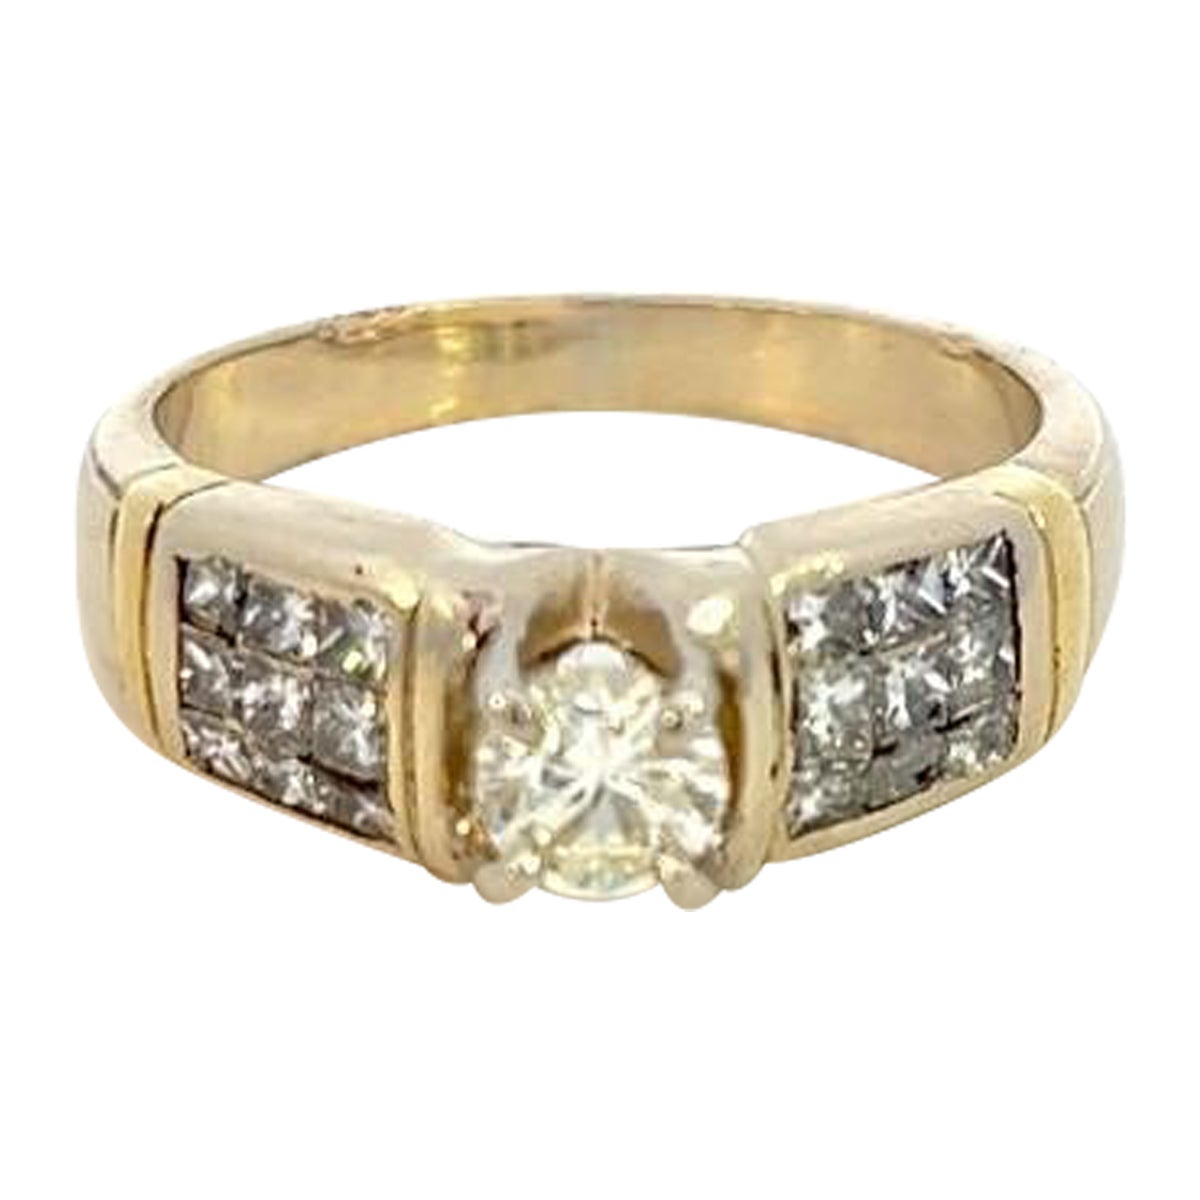 18K Yellow Gold apx 19/20 CTW round Diamond Engagement Ring SZ:8.5 7.86g 